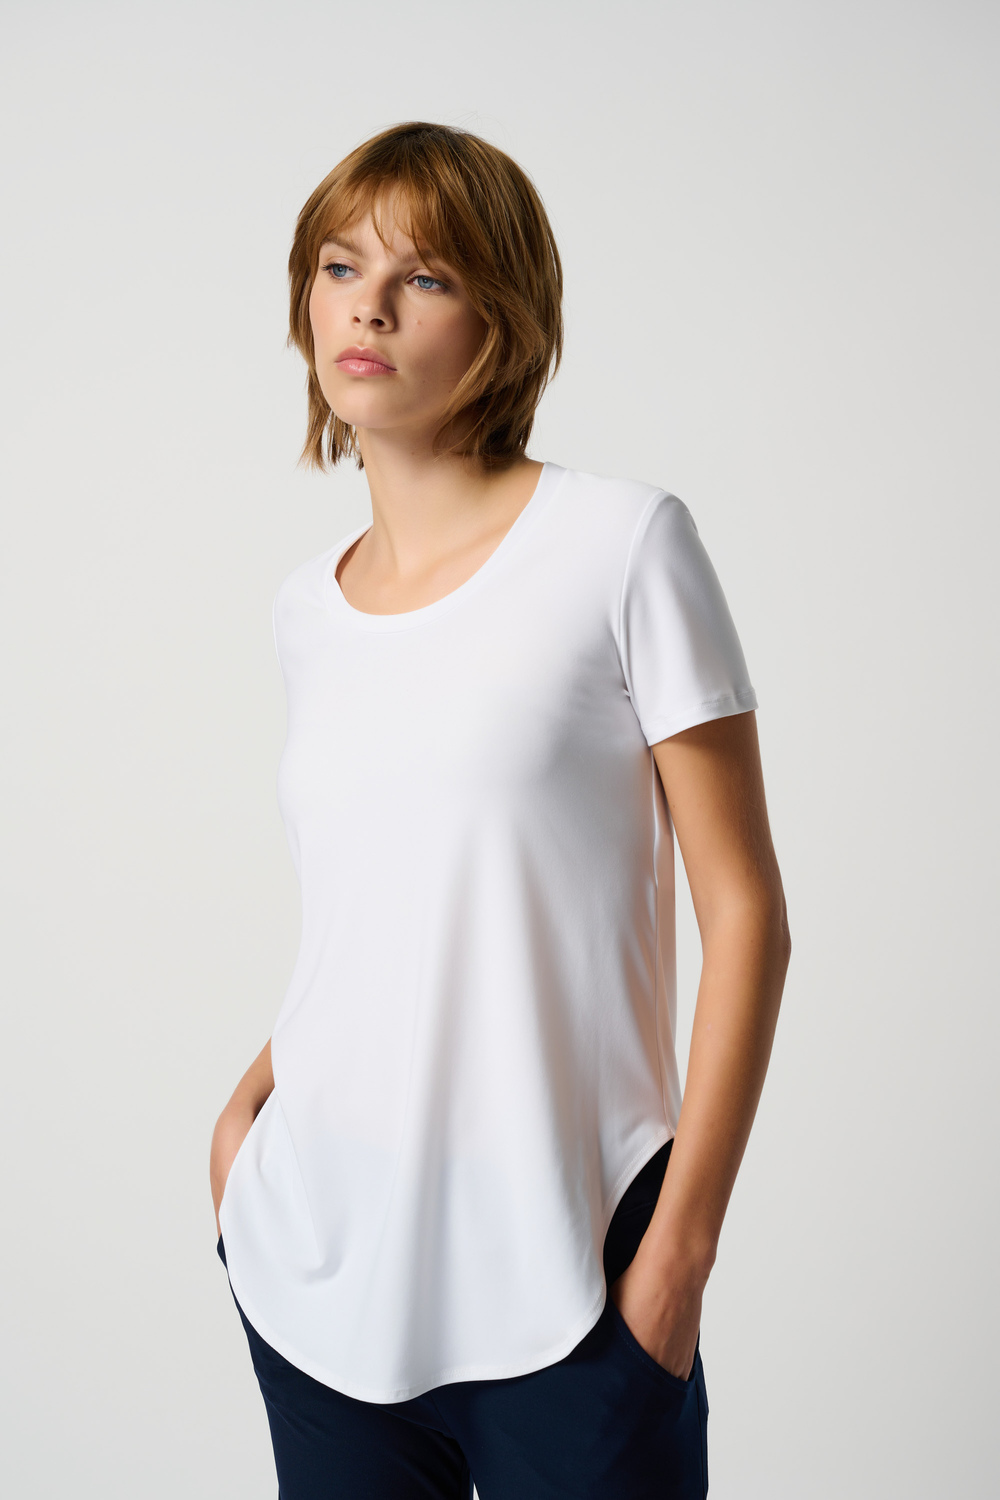 T-shirt long, bas arrondi modèle 183220S24. Vanille 30